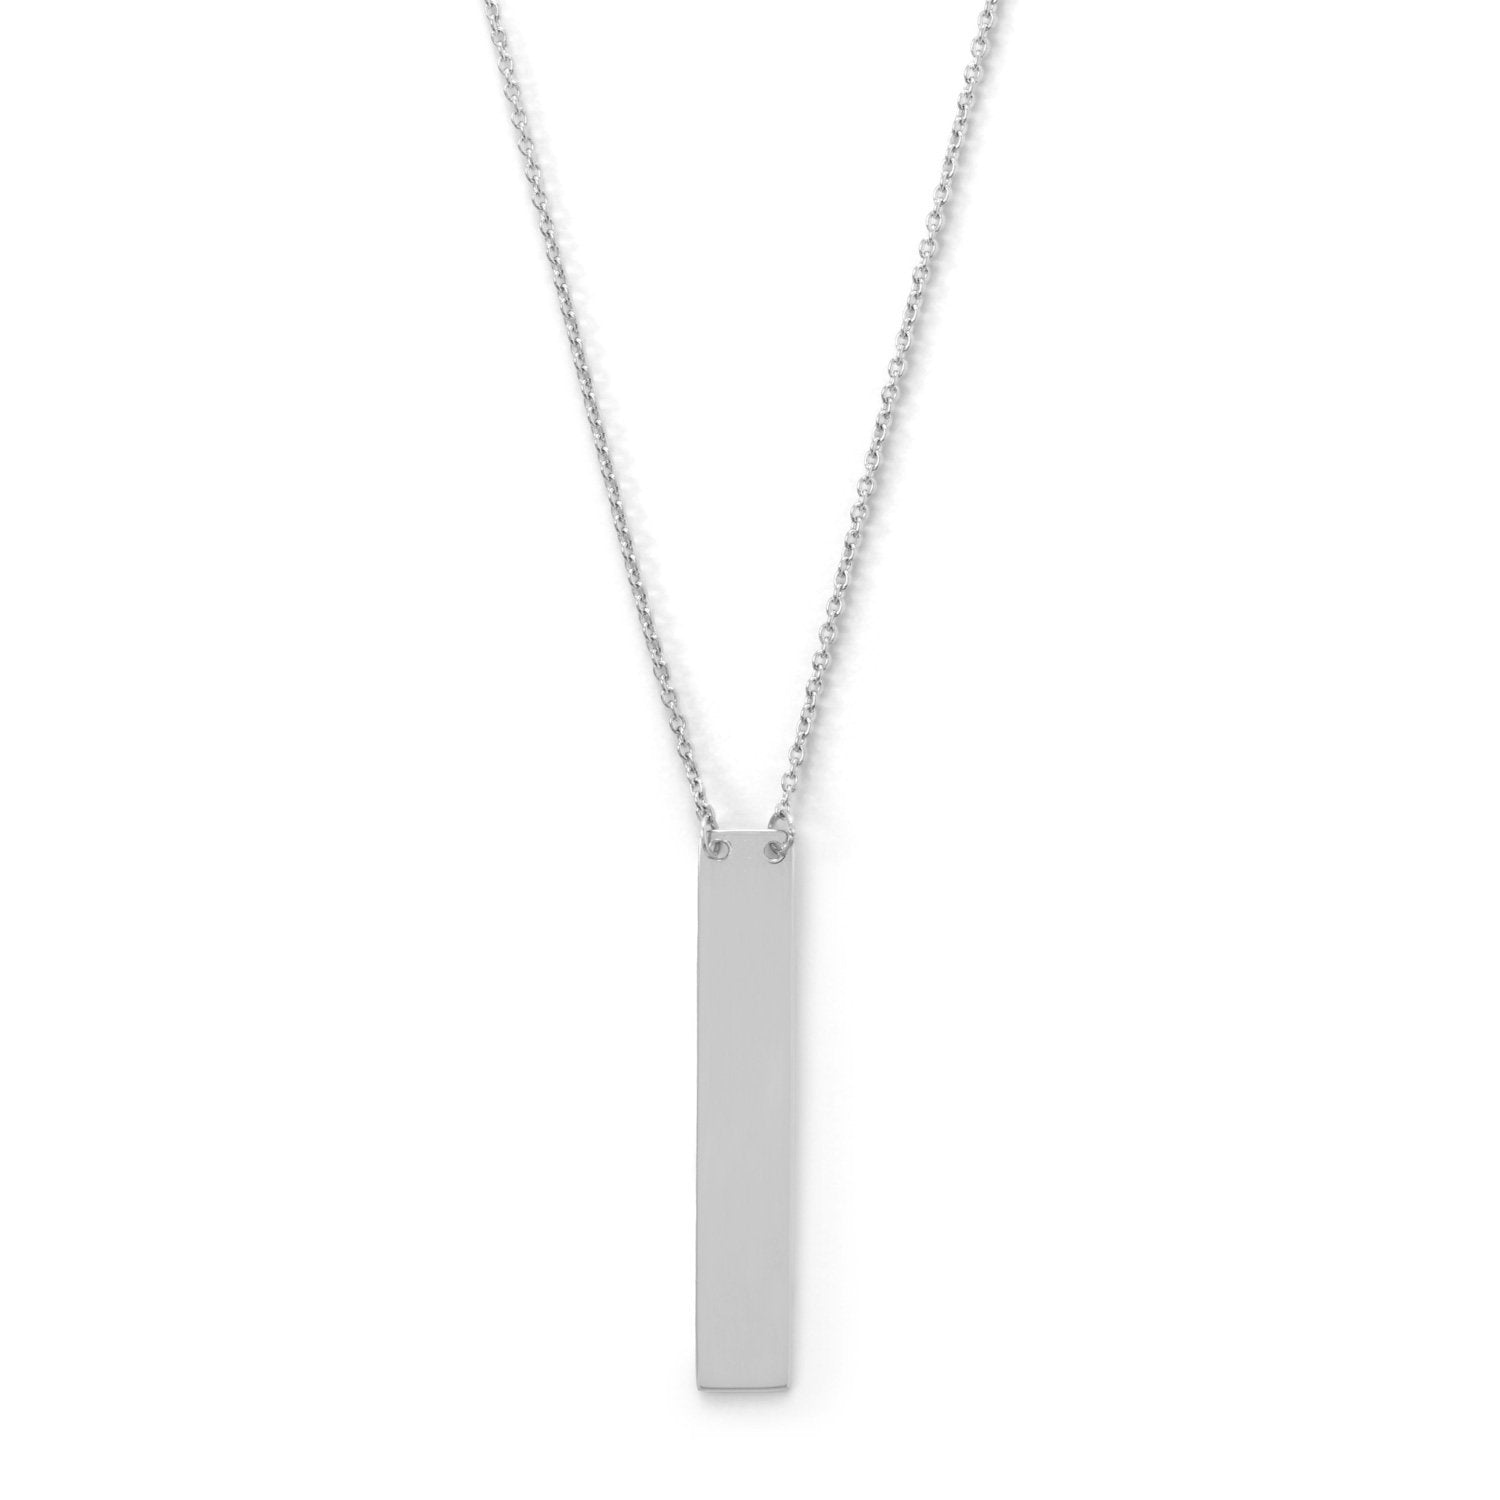 16" + 2" Sterling Silver Vertical Bar Drop Necklace - Joyeria Lady